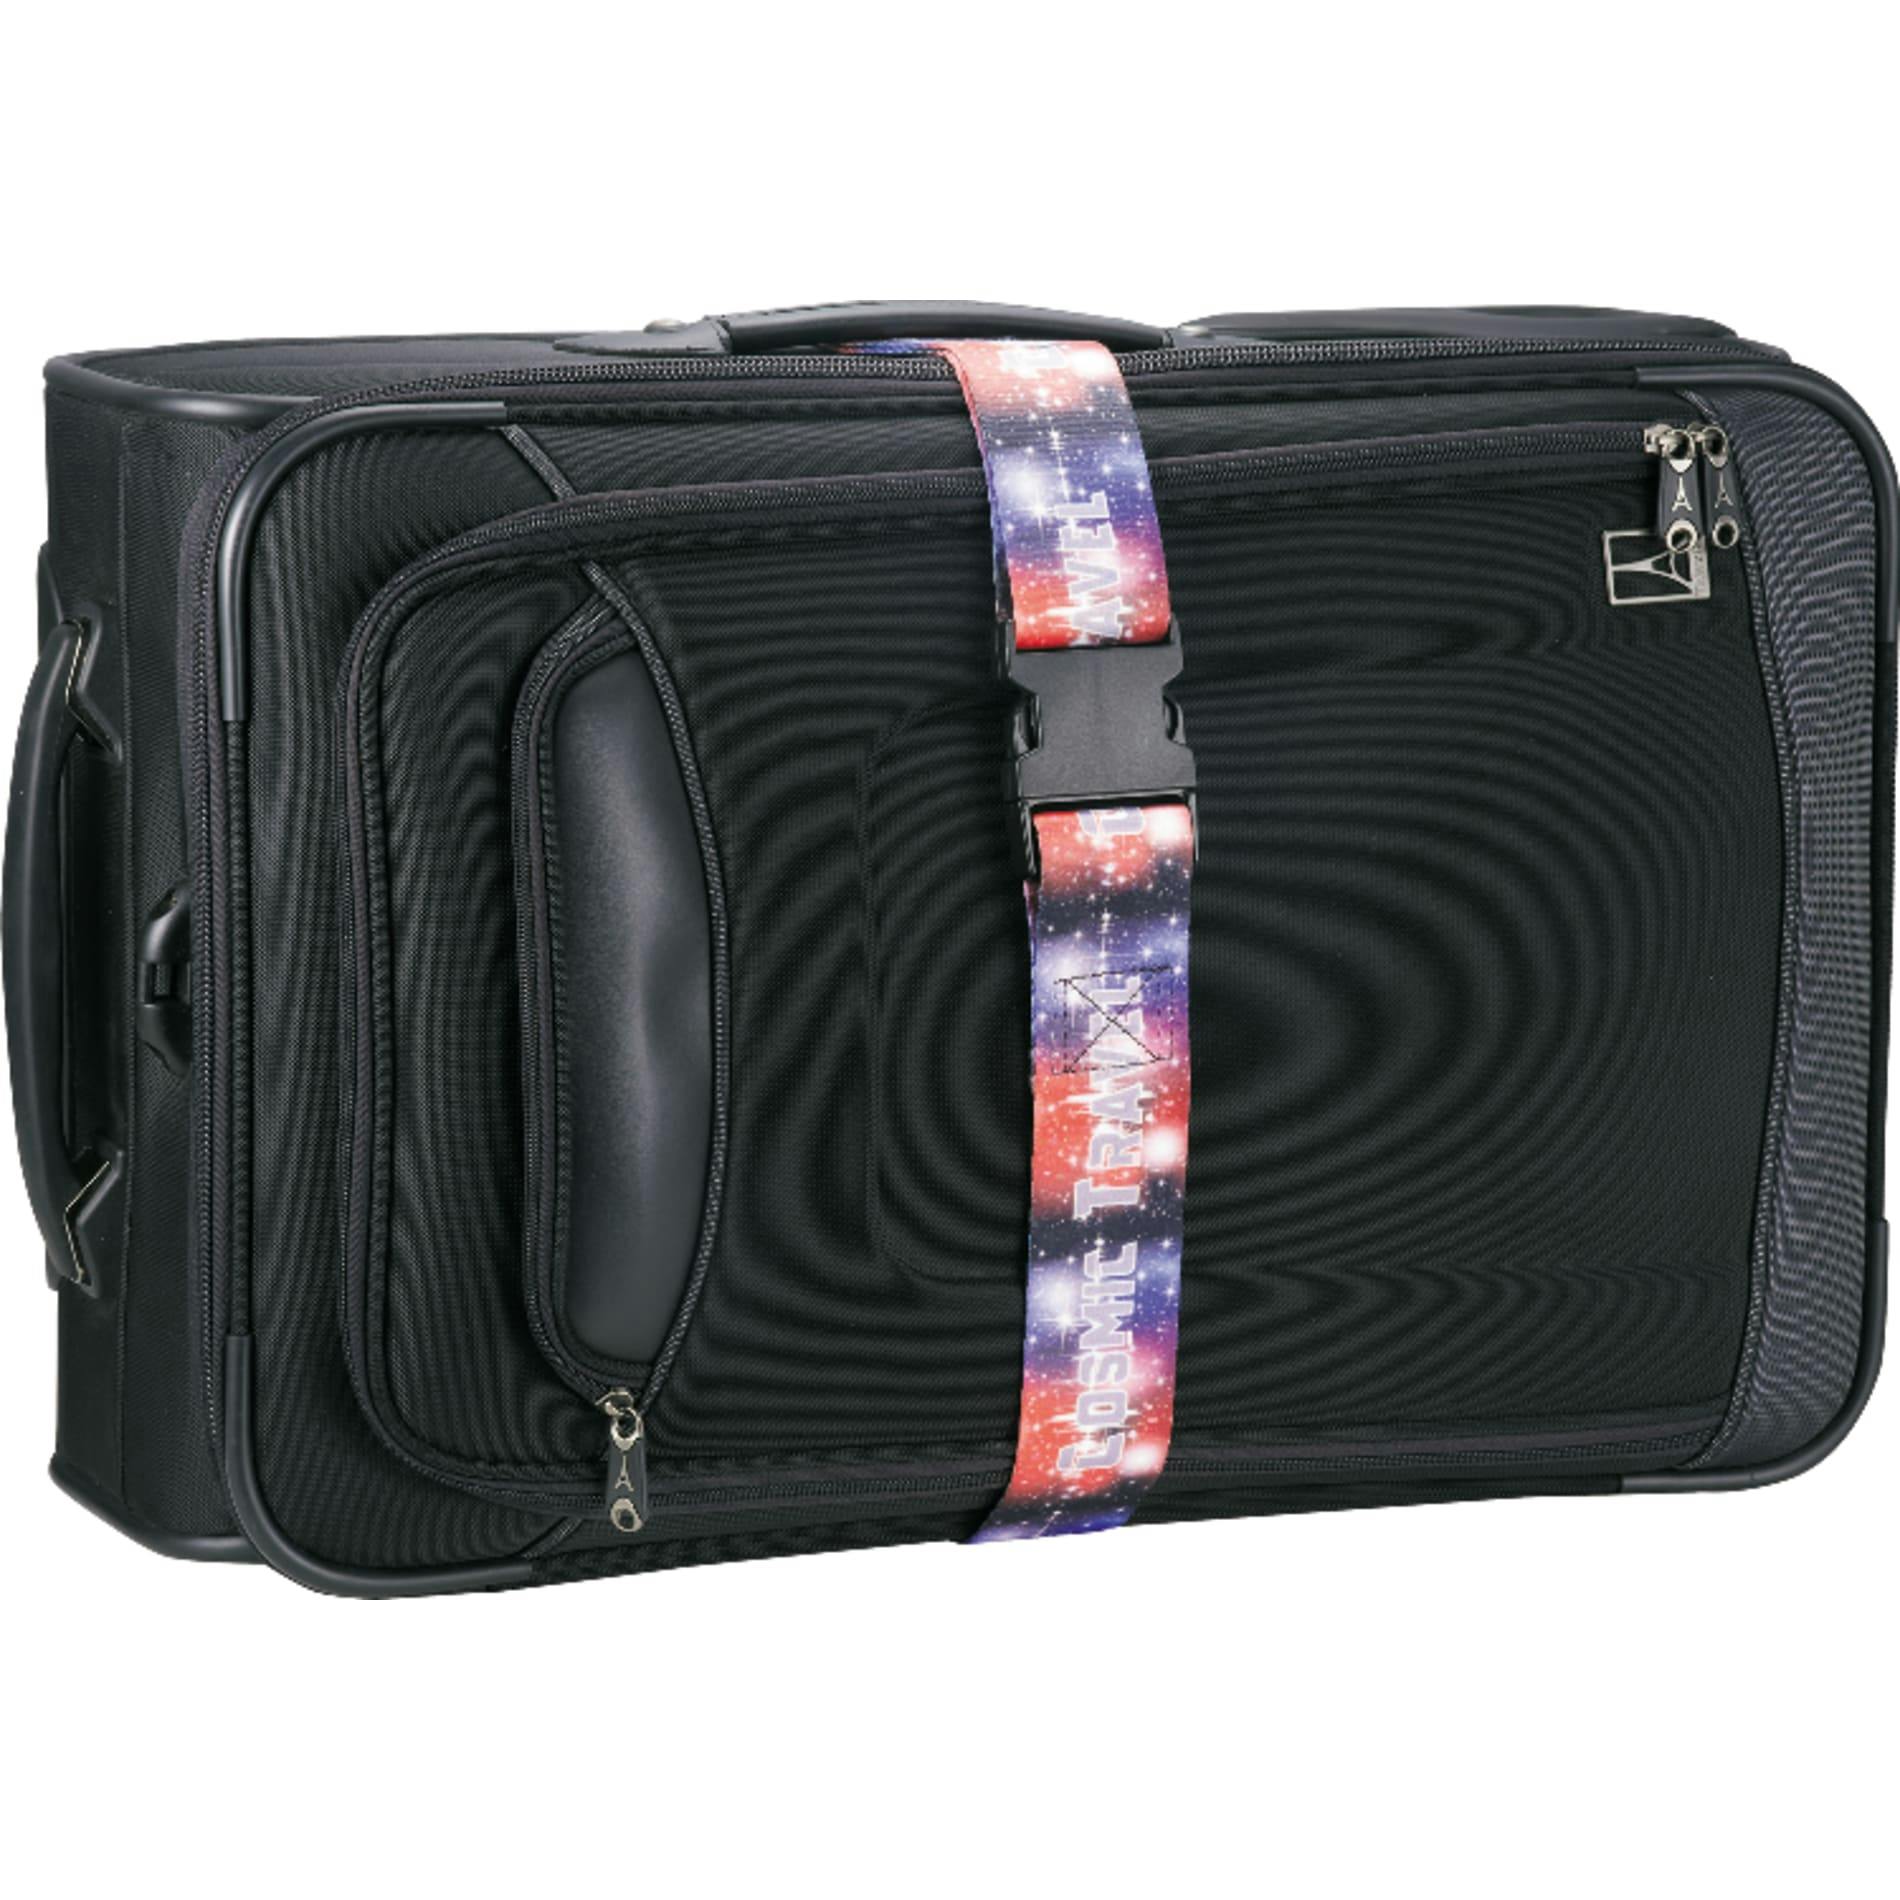 Full Color Premium Luggage Strap - additional Image 3